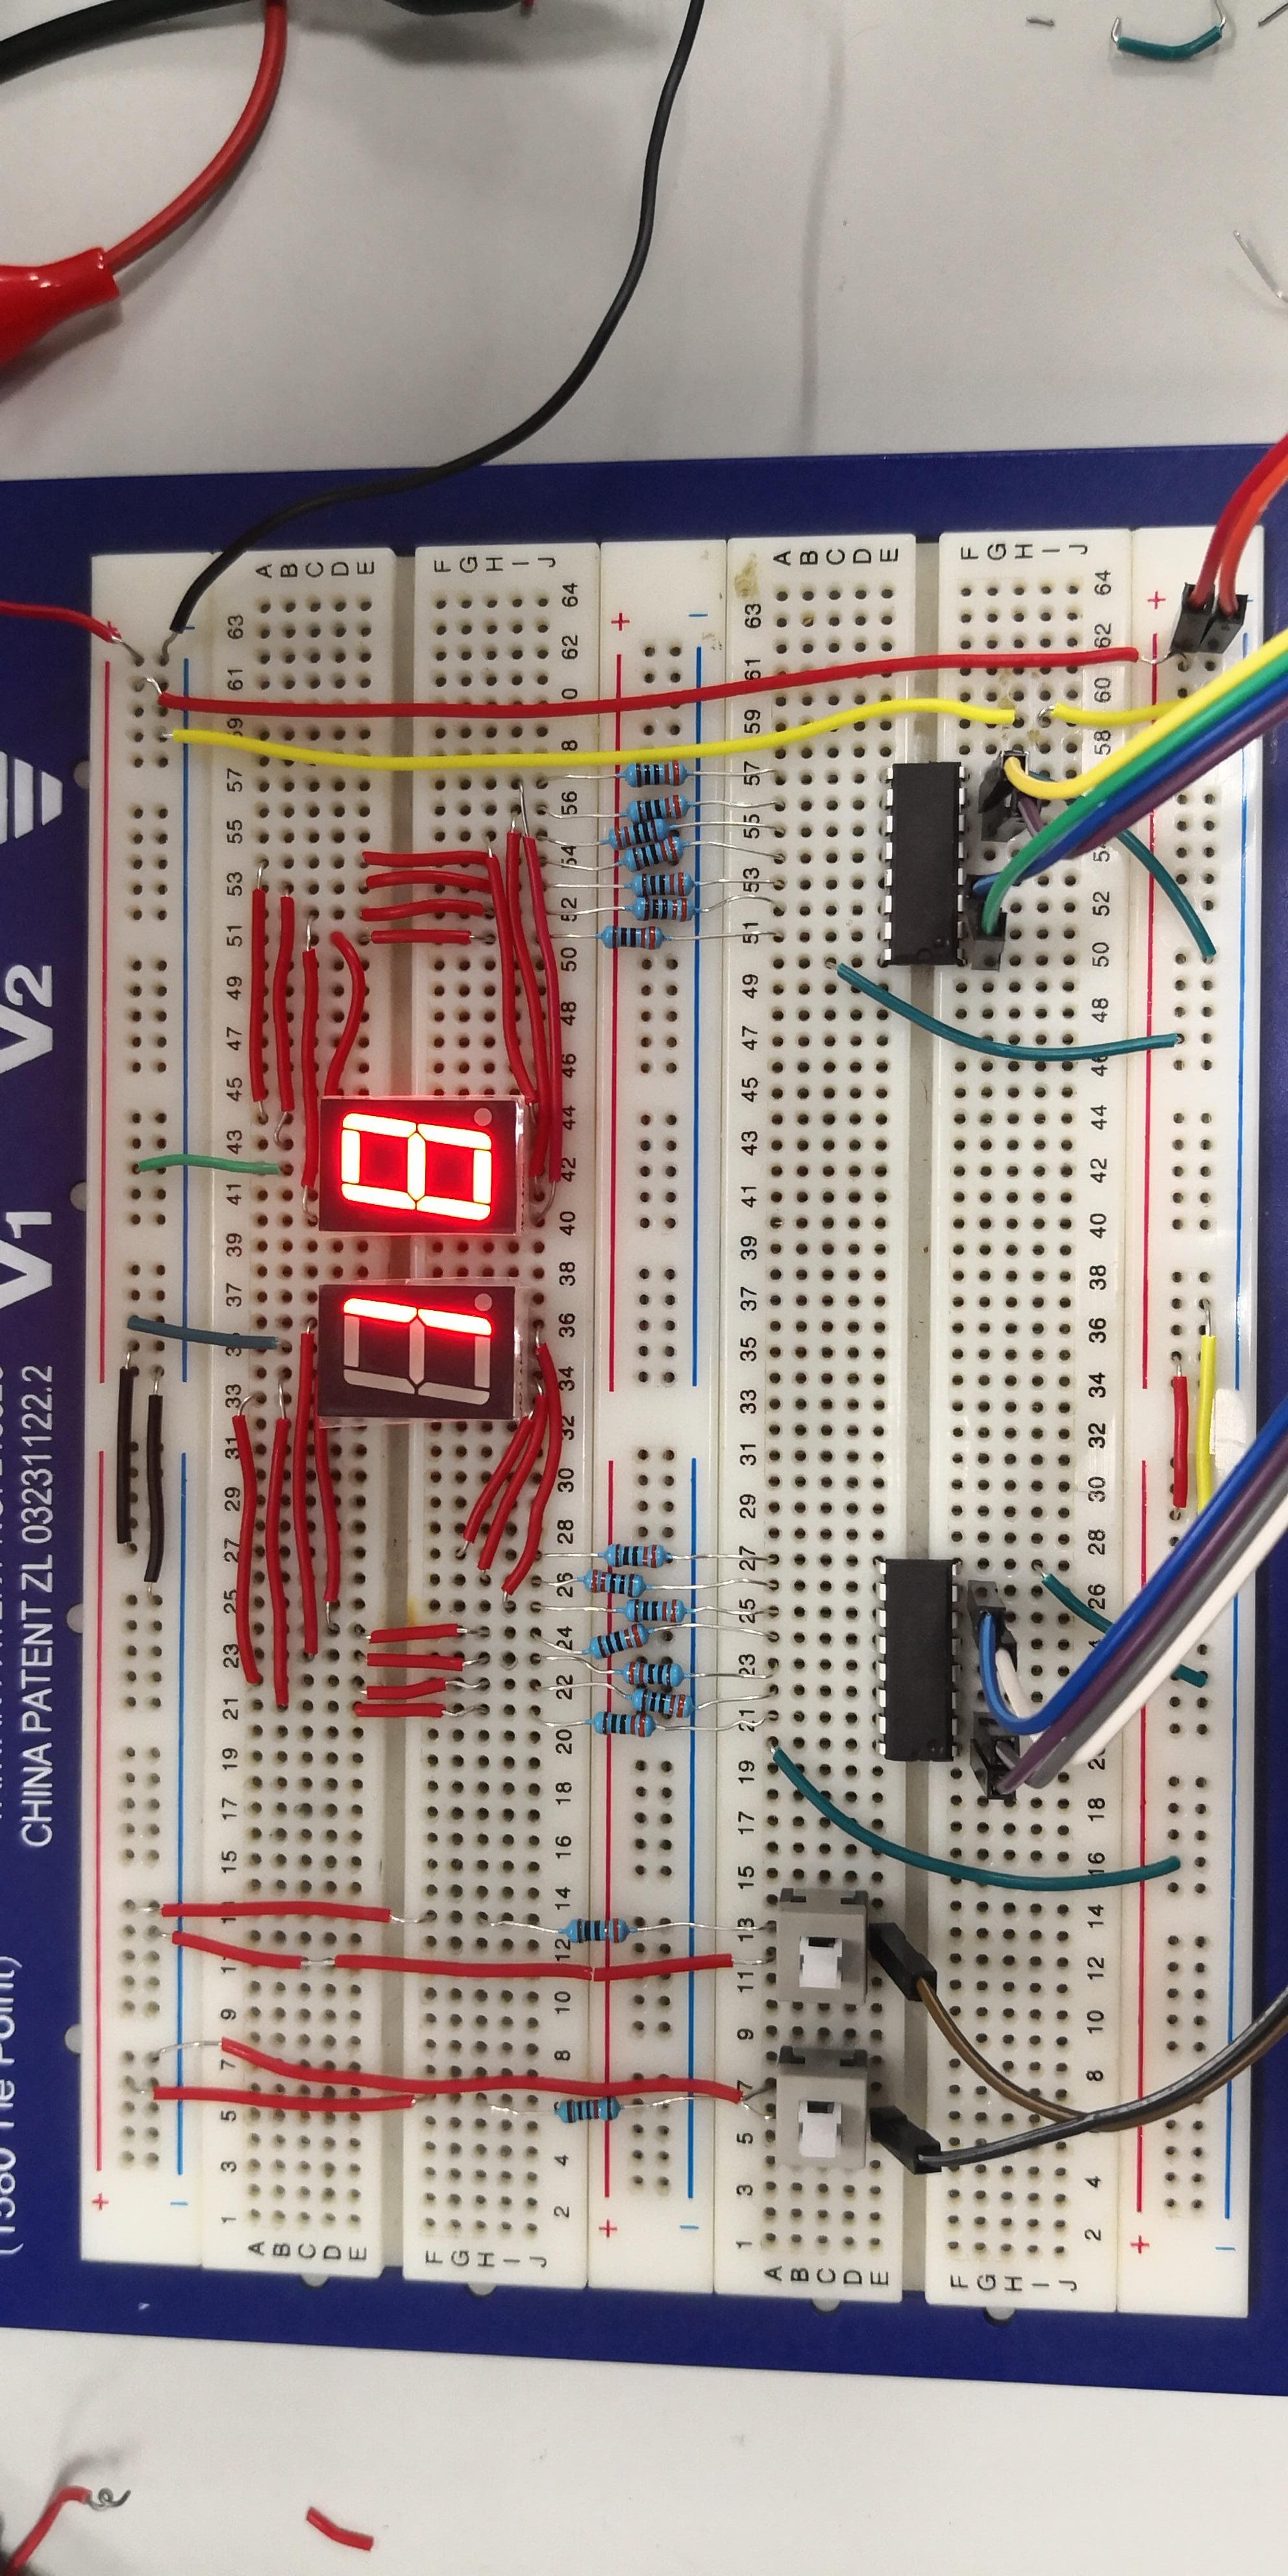 Circuit of dicoder and screen